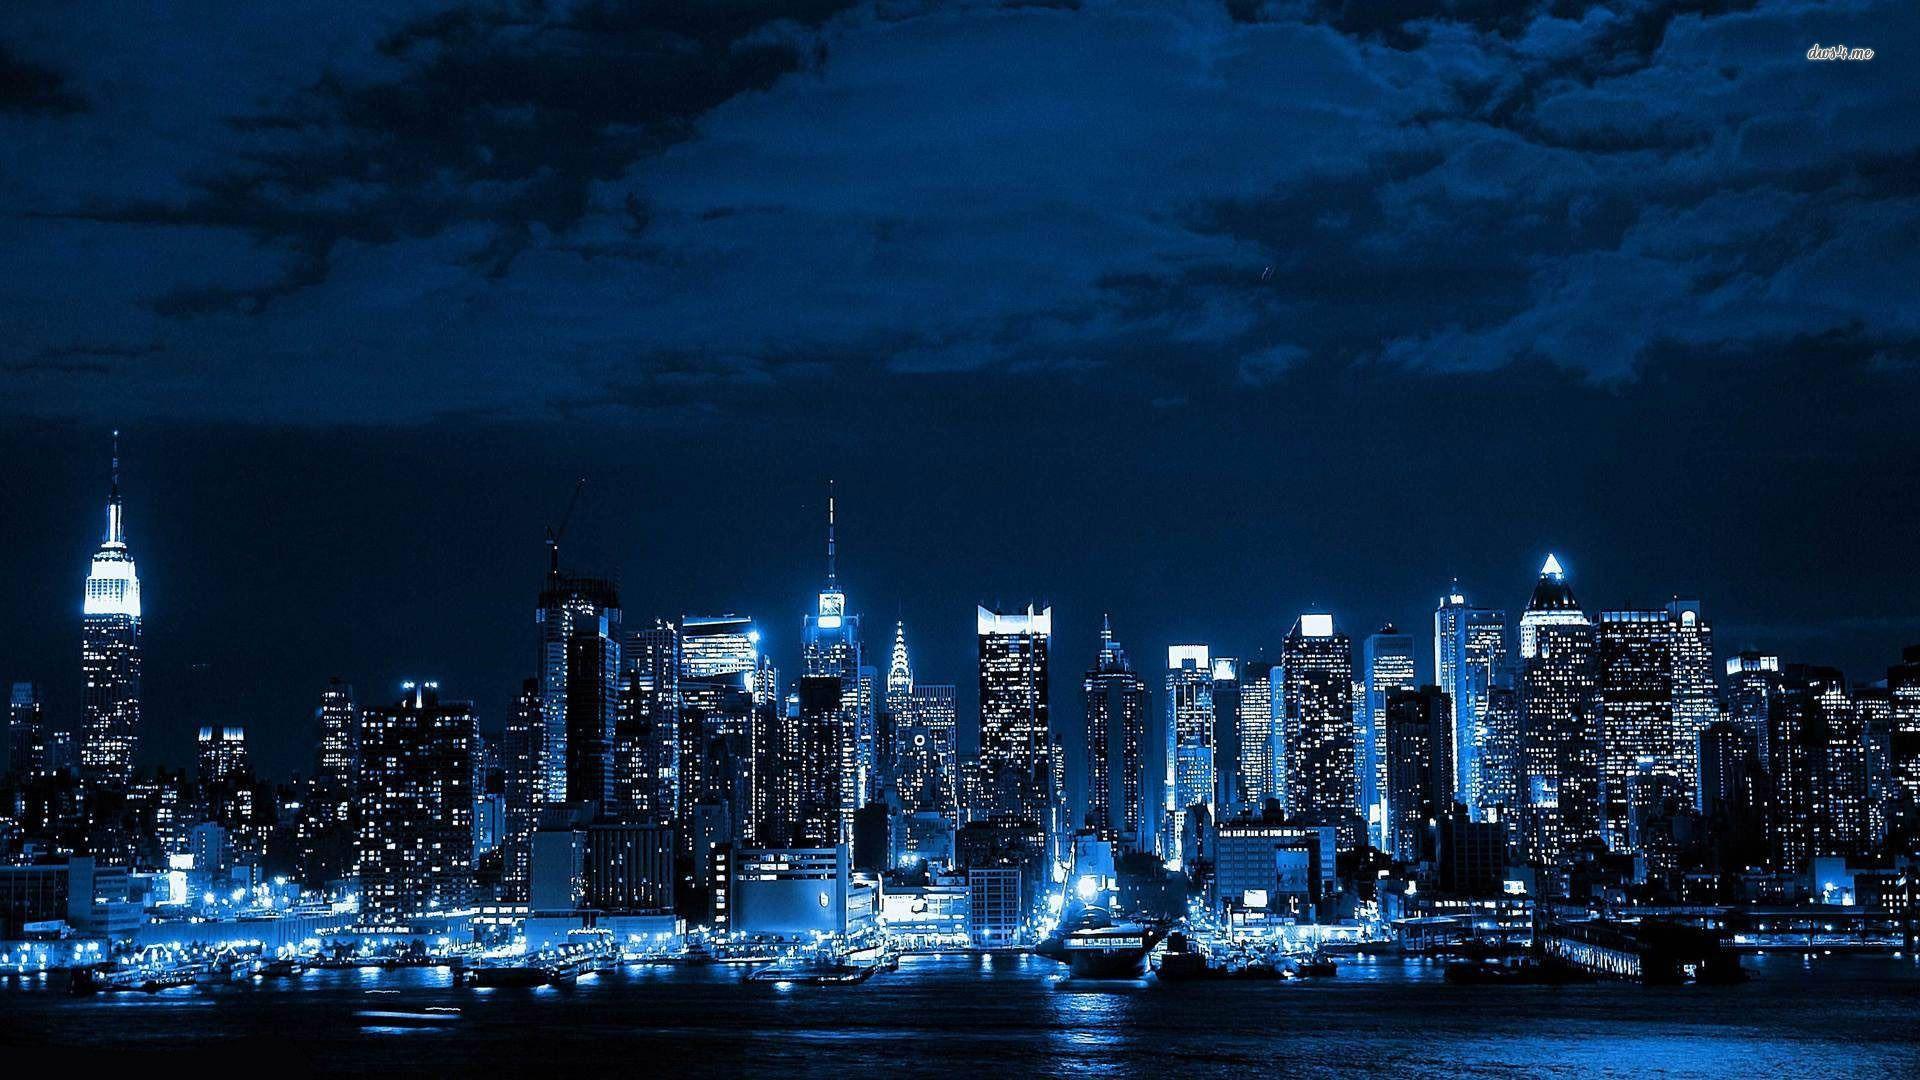 New York City At Night HD Image 19847 Full HD Wallpaper Desktop: 1920x1080. City wallpaper, New york wallpaper, Night city